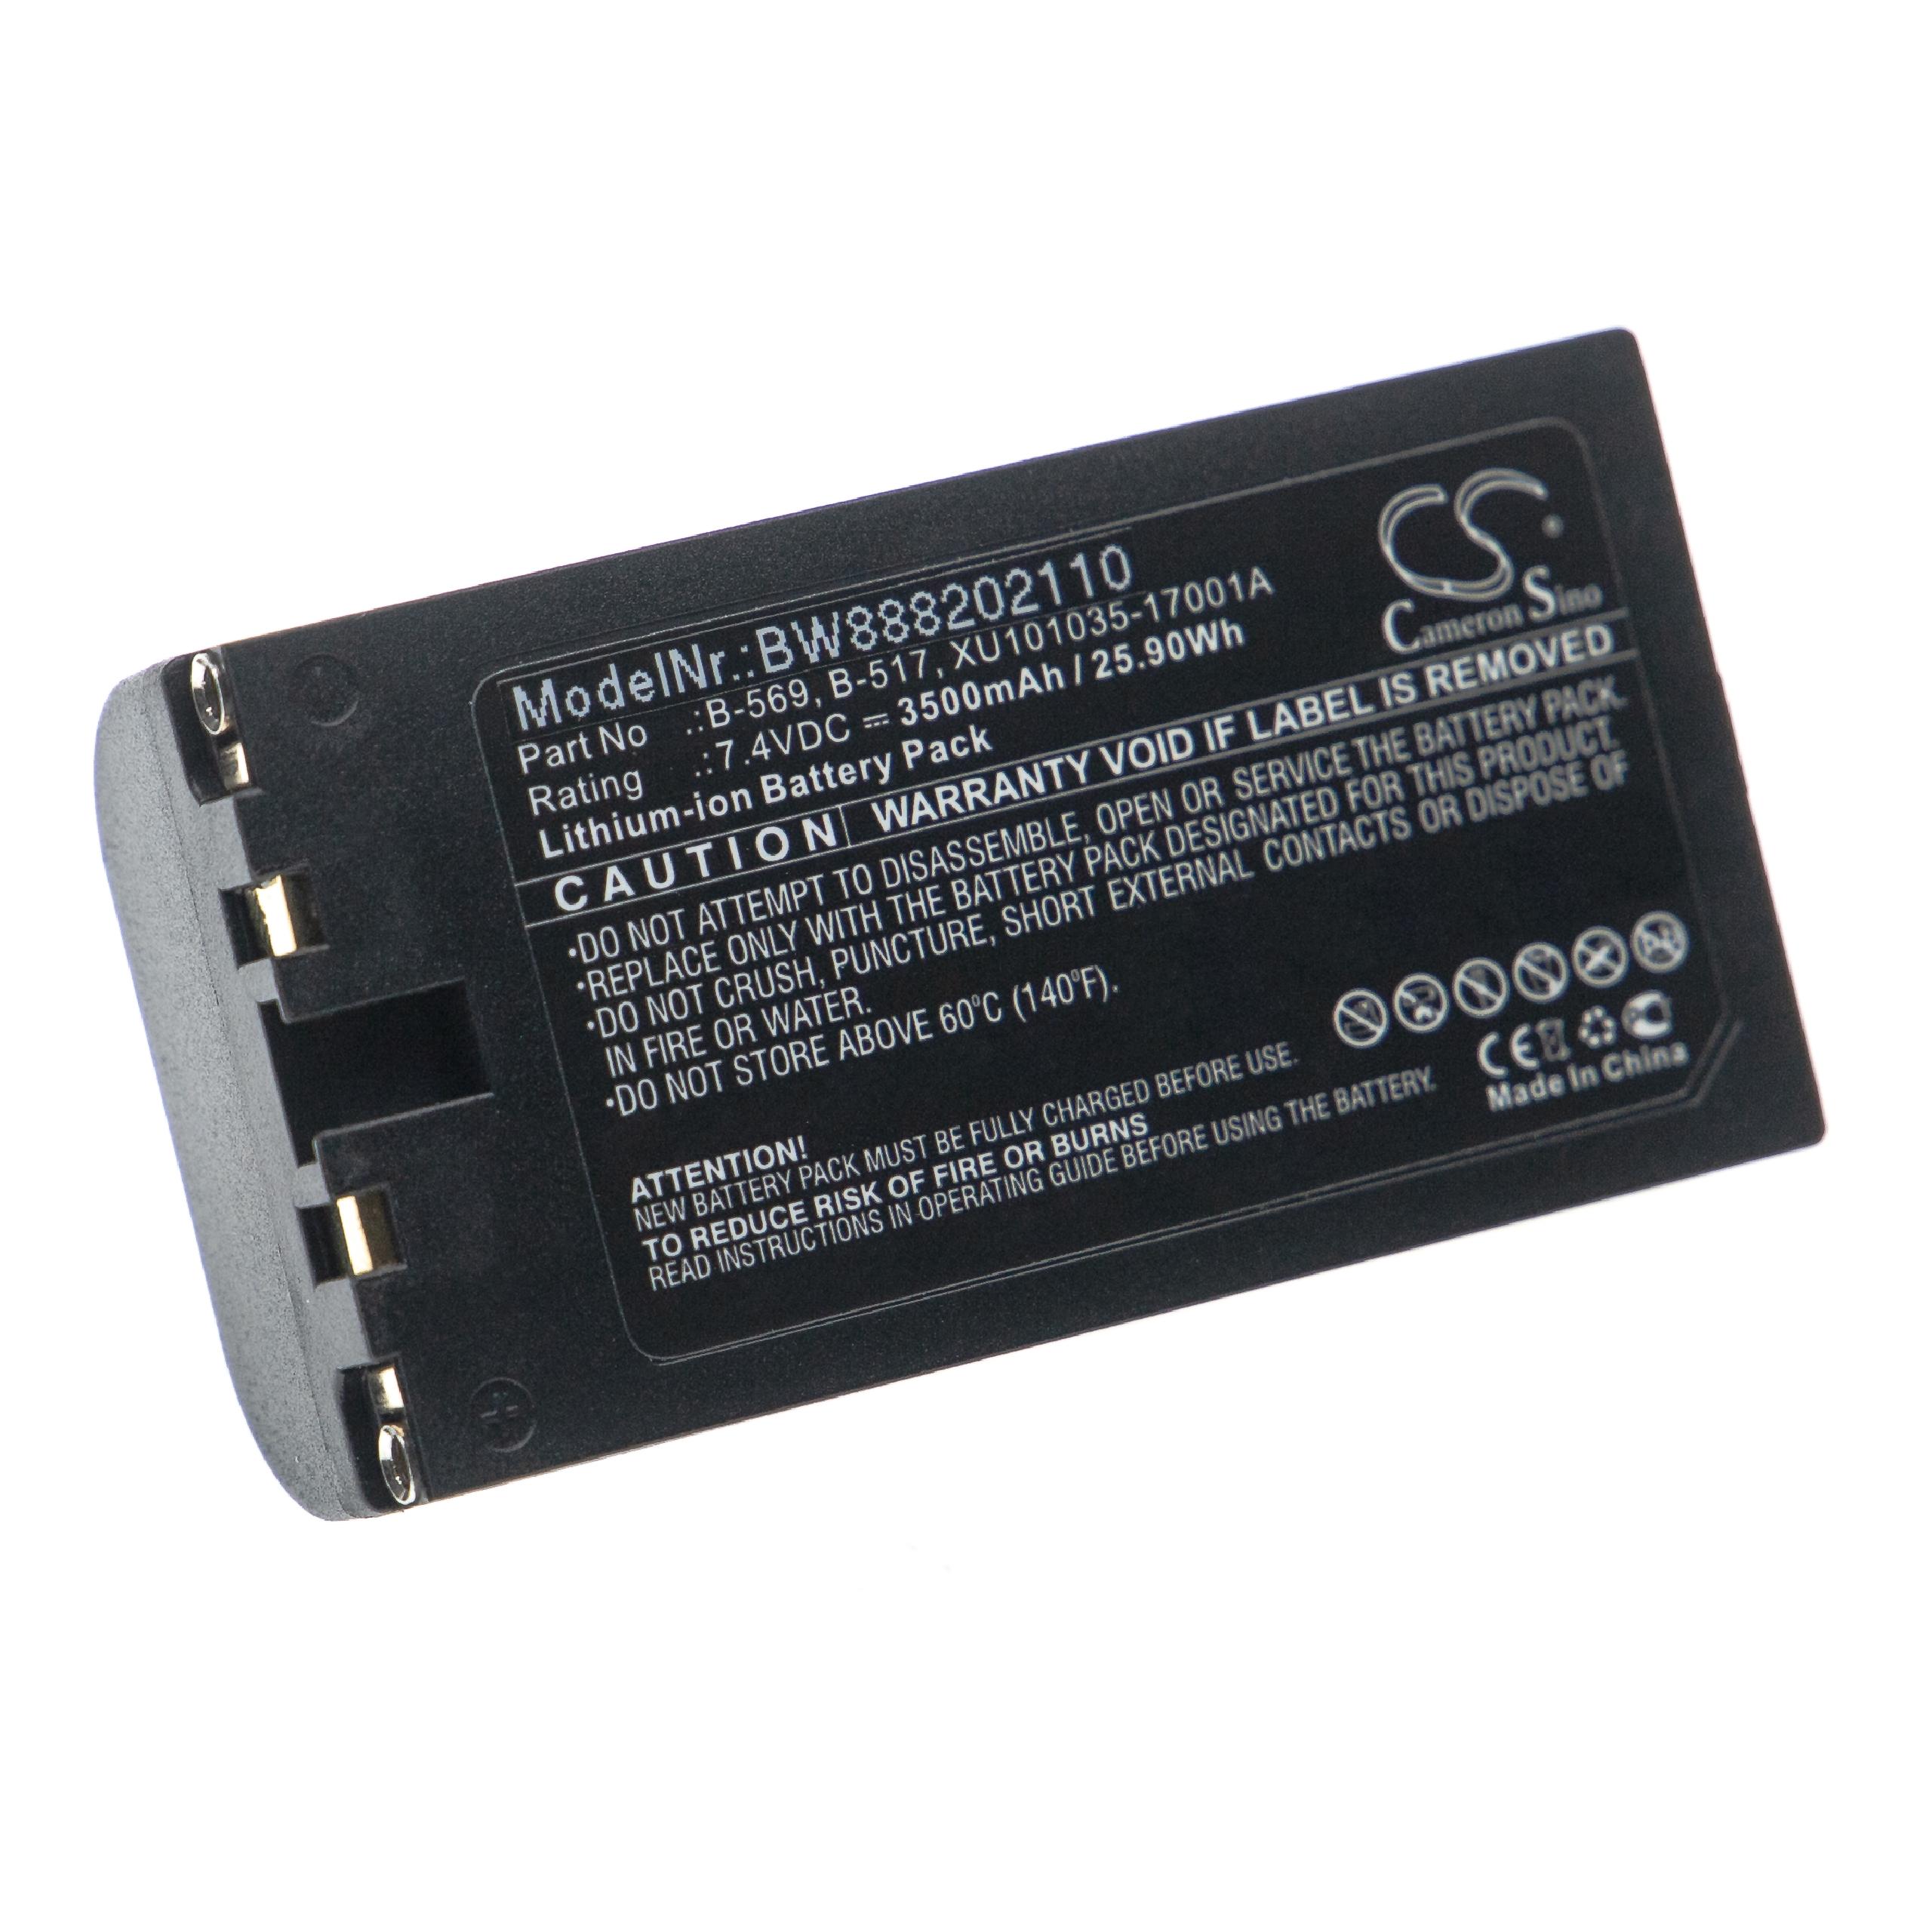 Laser Battery Replacement for Graphtec XU101035-17001A, B-569, B-517 - 3500mAh 7.4V Li-Ion